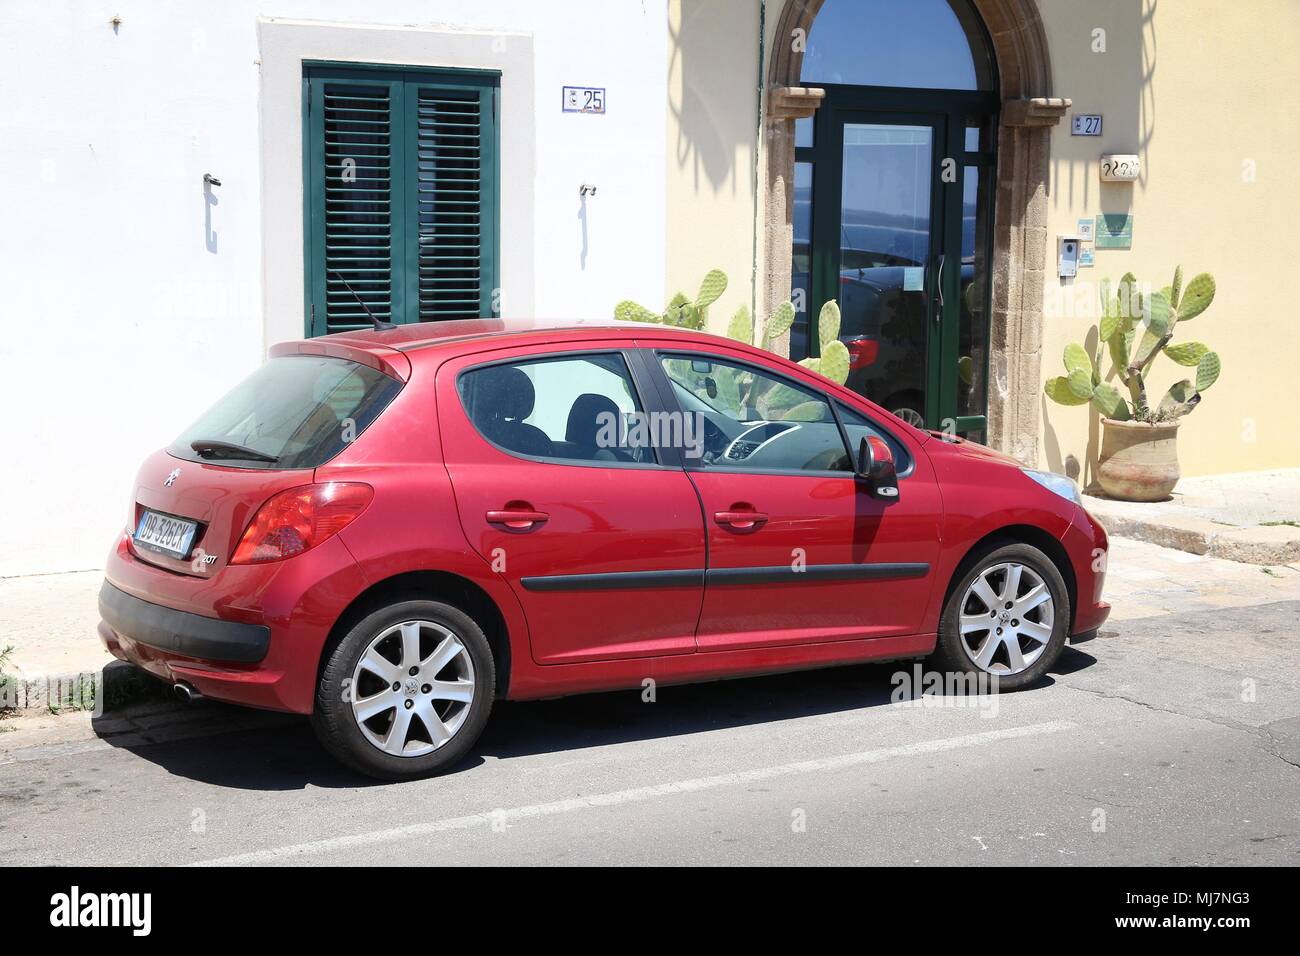 Gallipoli Italie 31 Mai 2017 Peugeot 207 Berline Petite Voiture Stationnee En Italie Il Y A 41 Millions De Vehicules Immatricules En Italie Photo Stock Alamy